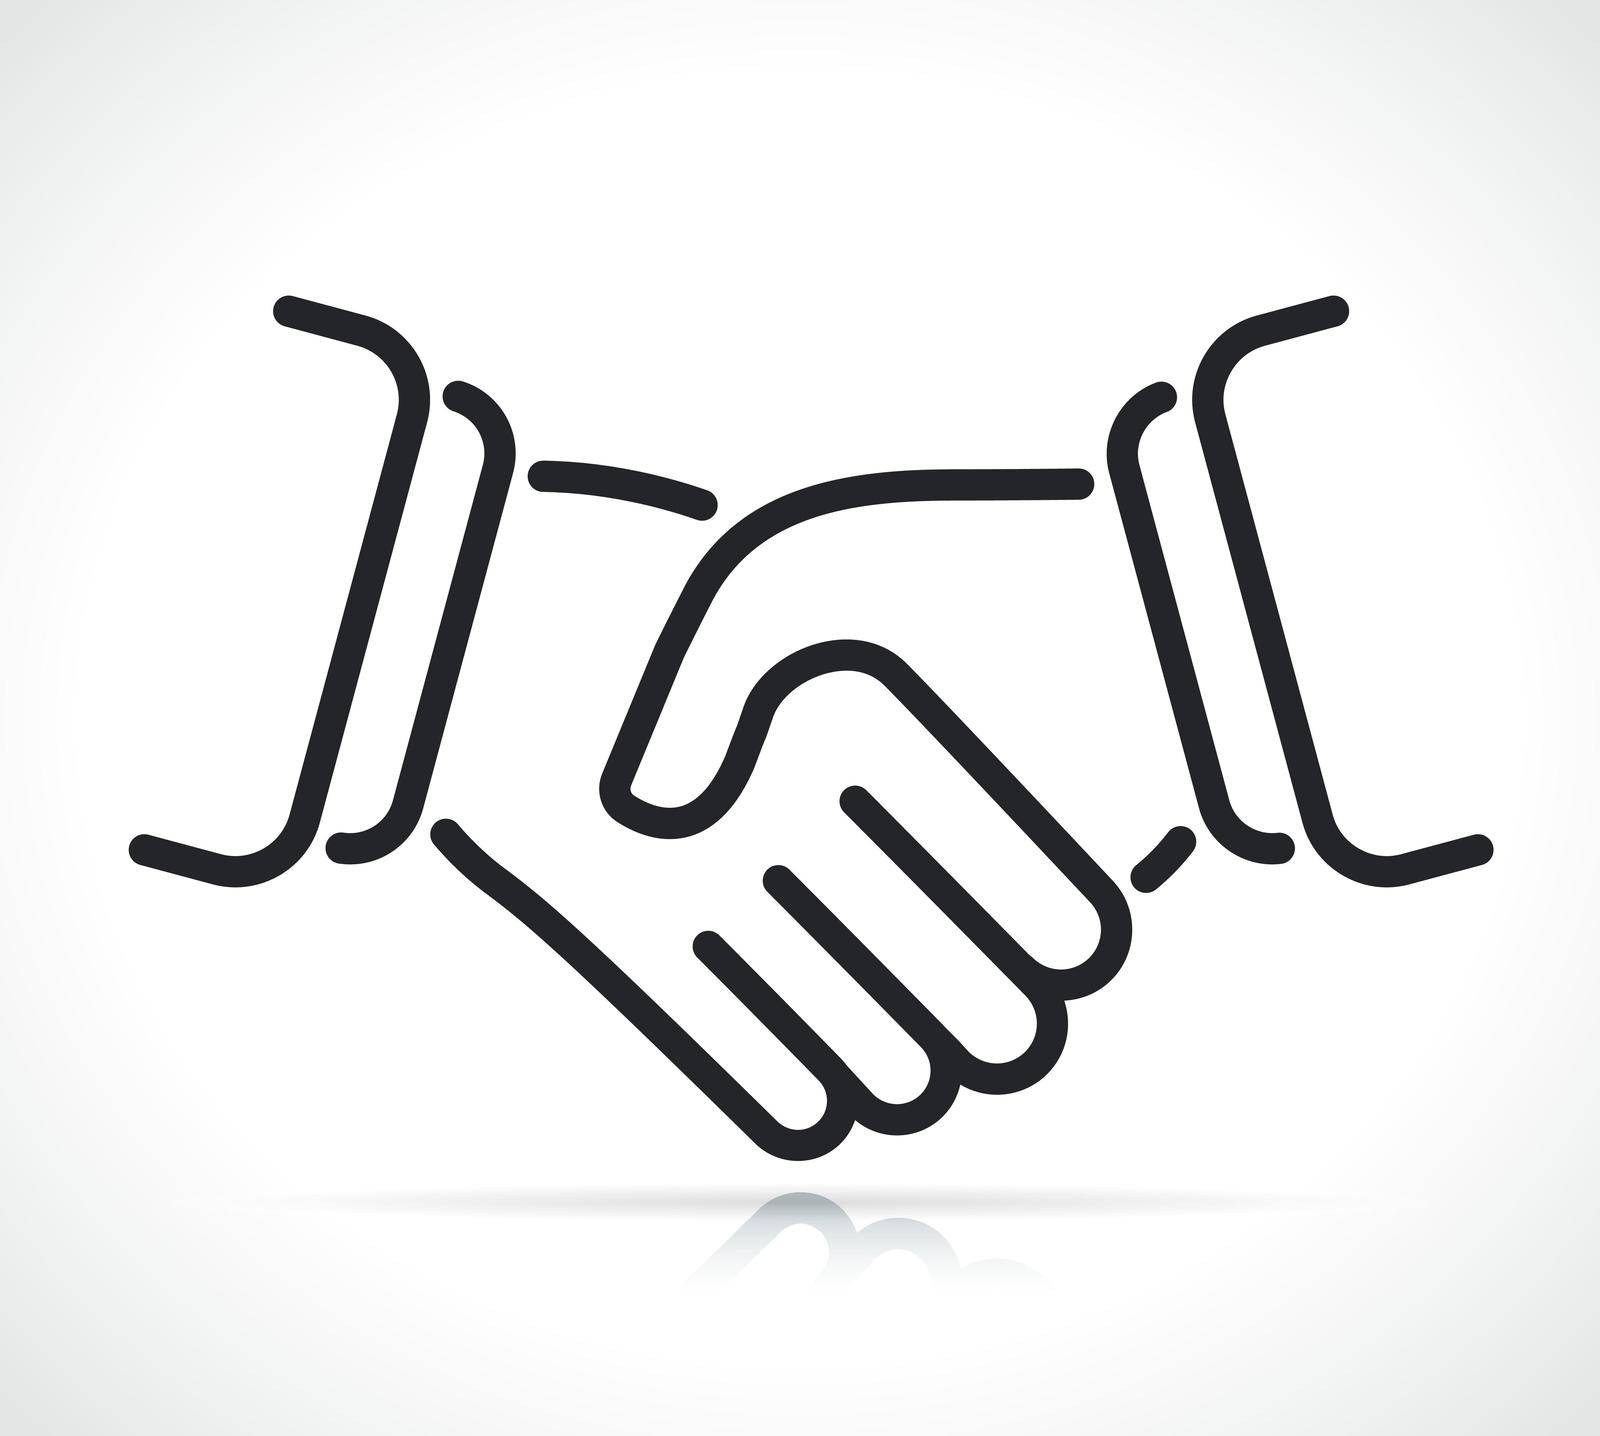 handshake or partnership thin line icon isolated